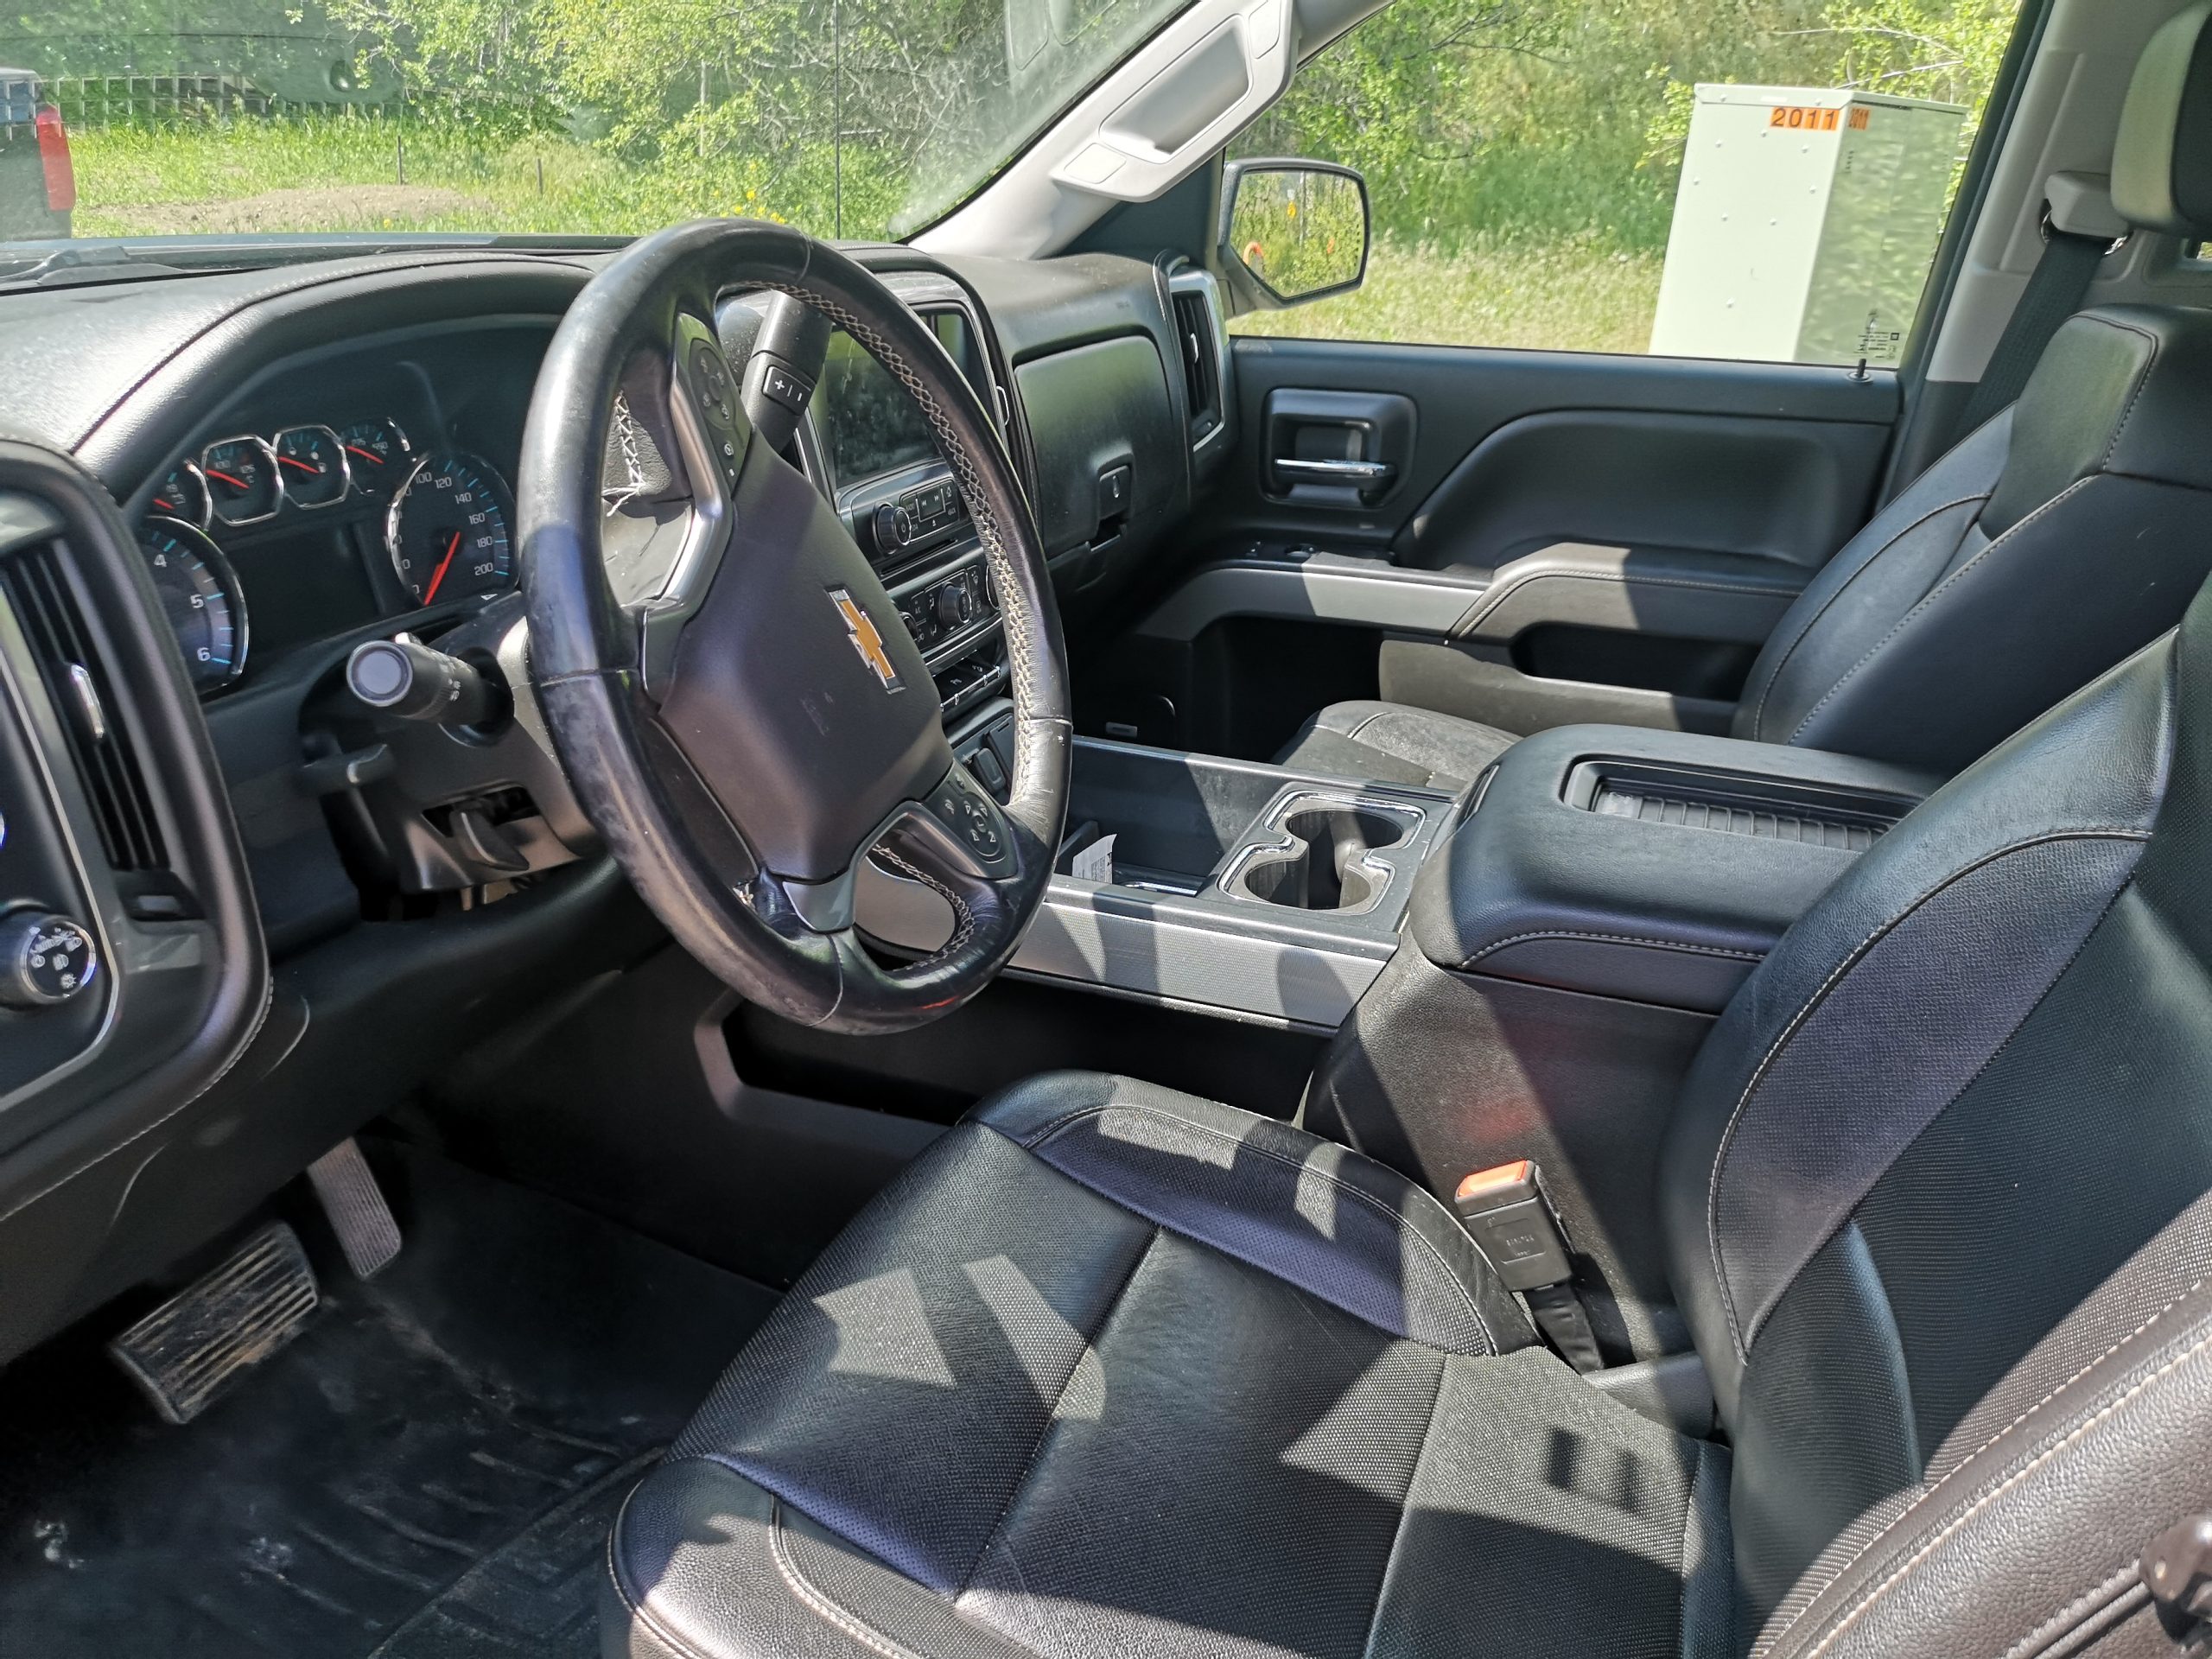 2018 Chevrolet Silverado 1500 #B-KEL-0524 Located in Kelowna